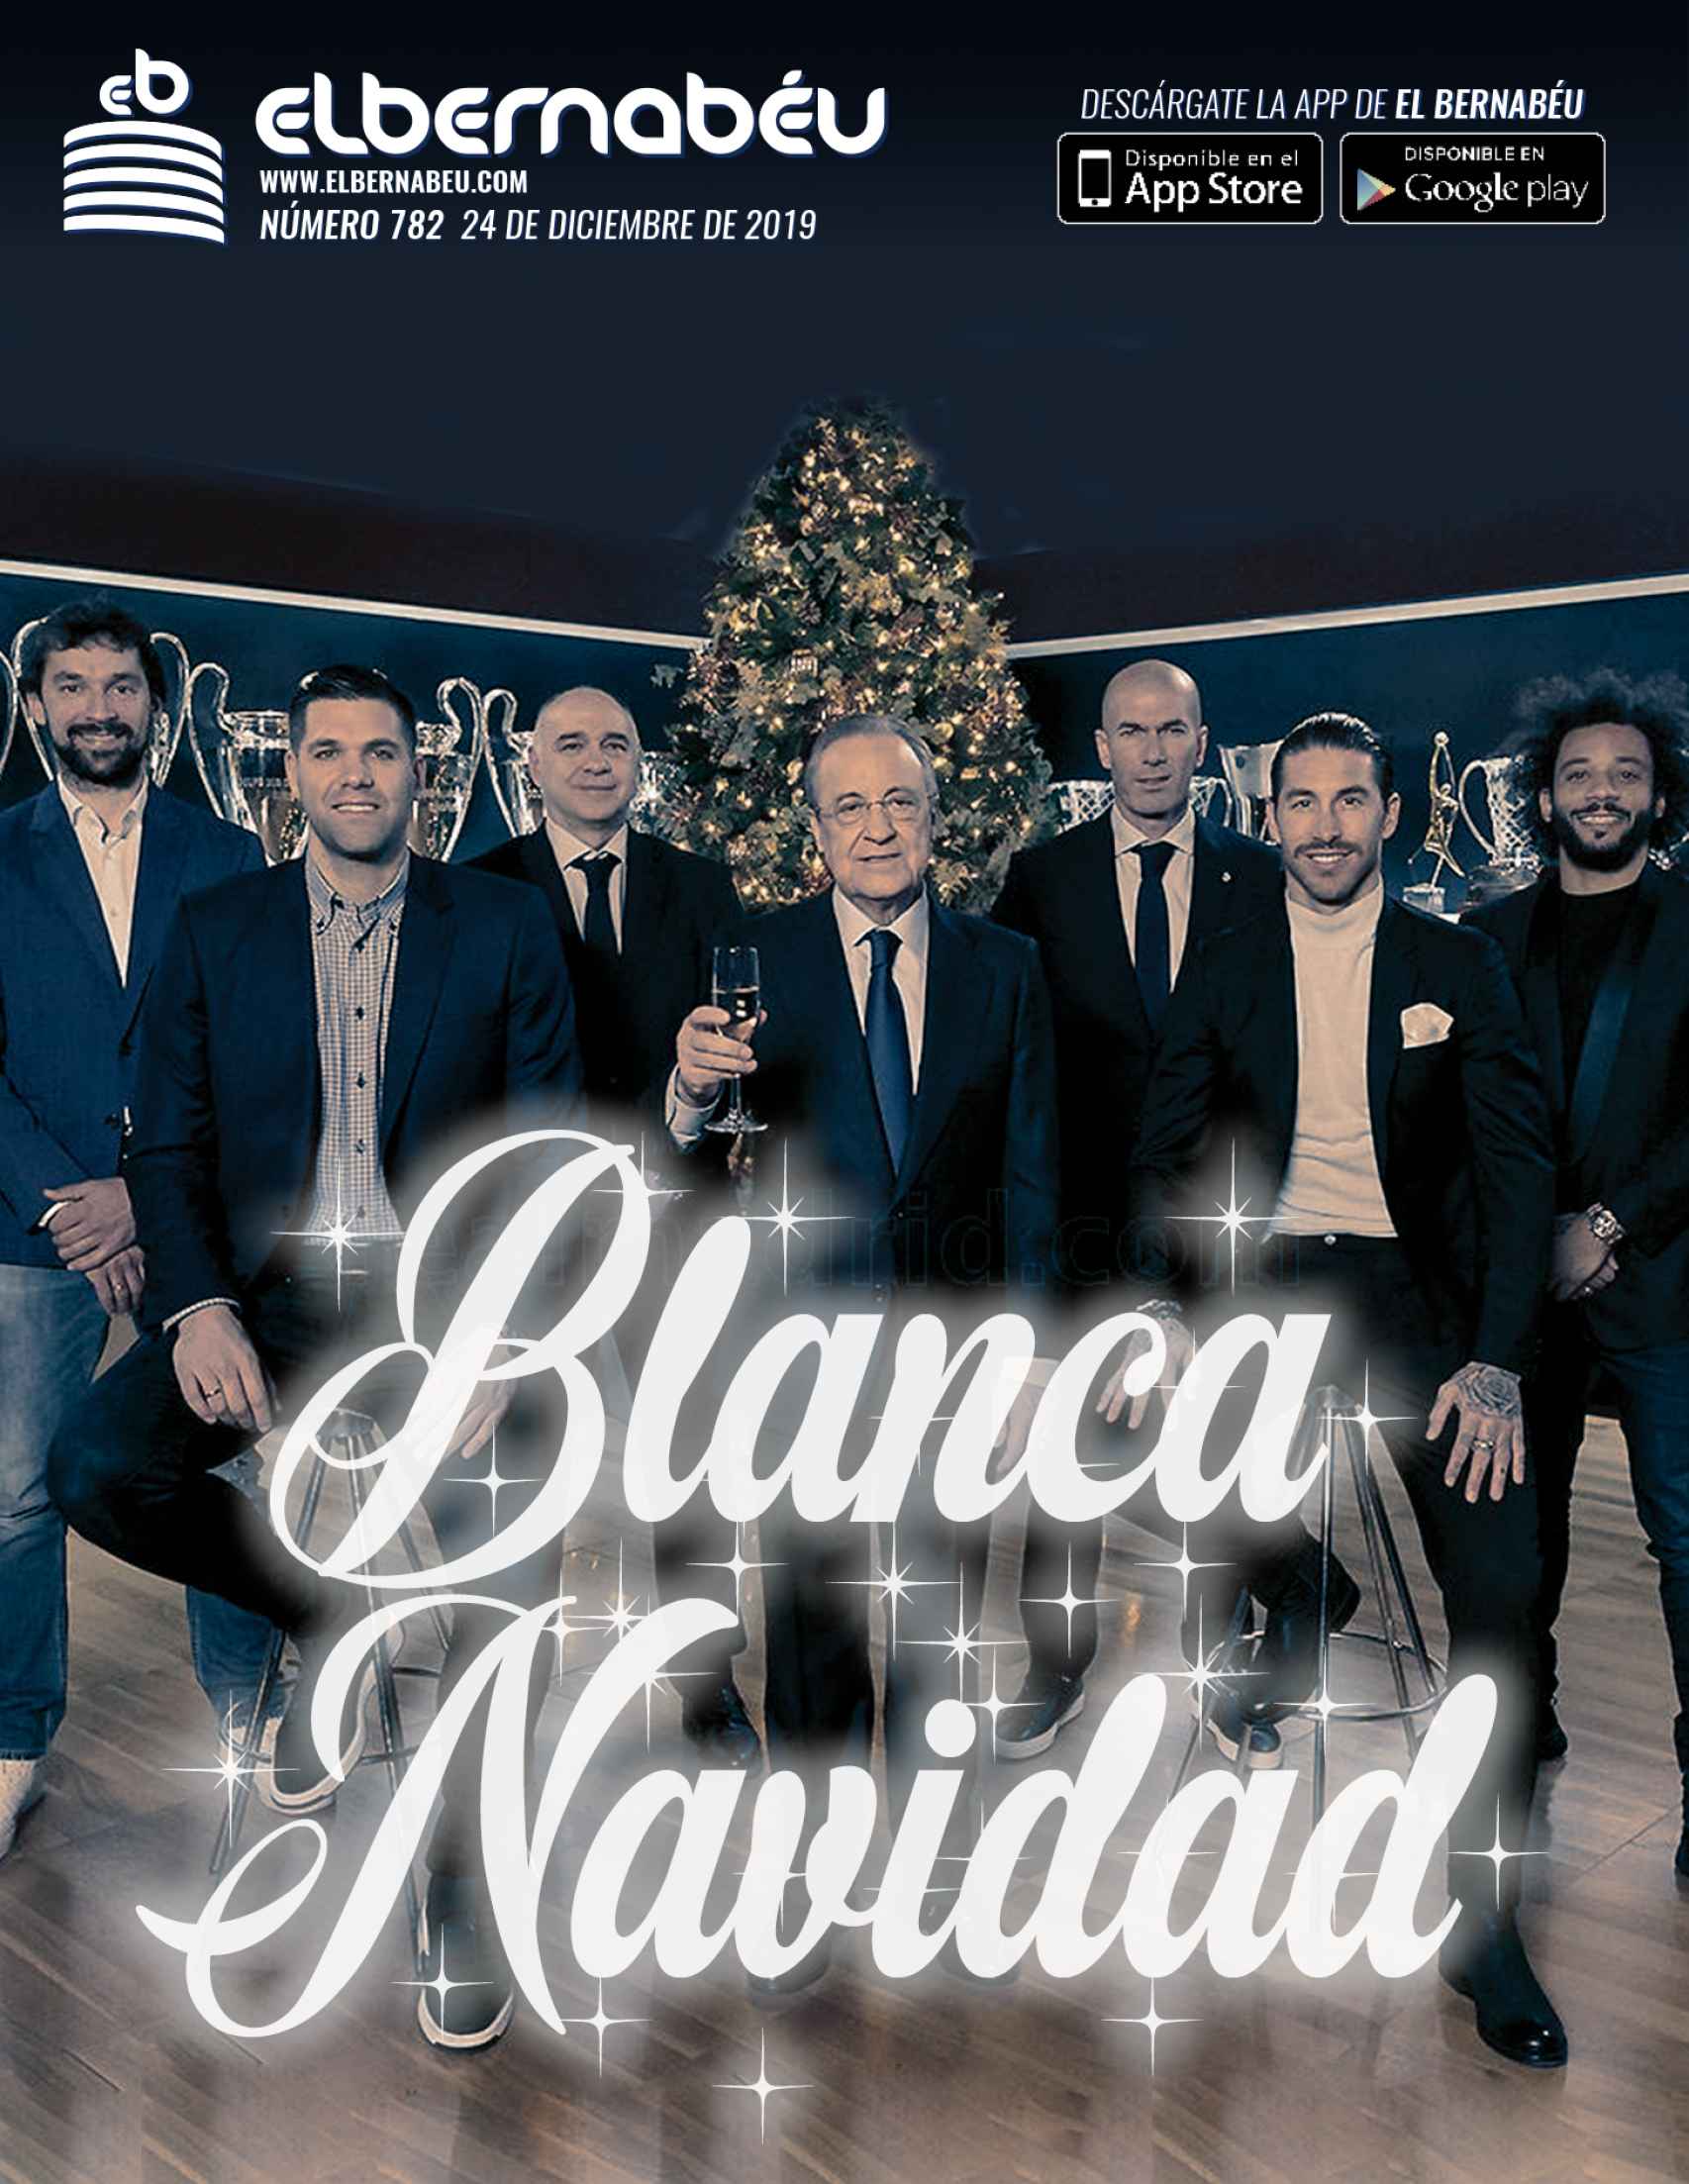 La portada de El Bernabéu (24/12/2019)